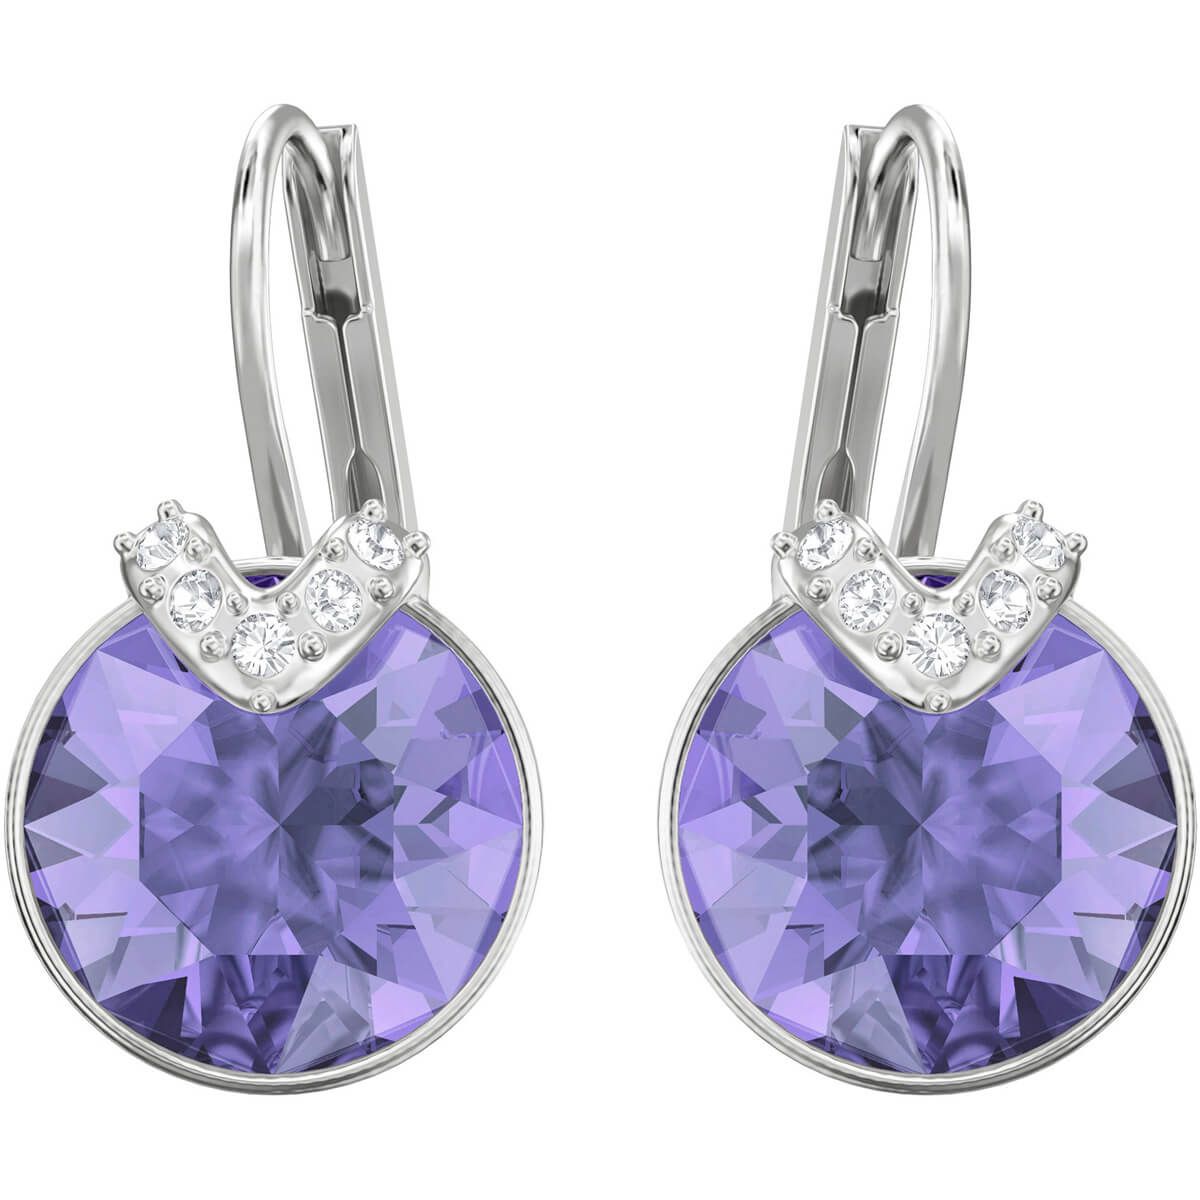 Buy Swarovski Bella V Pierced Earrings Violet Rhodium Plating Online